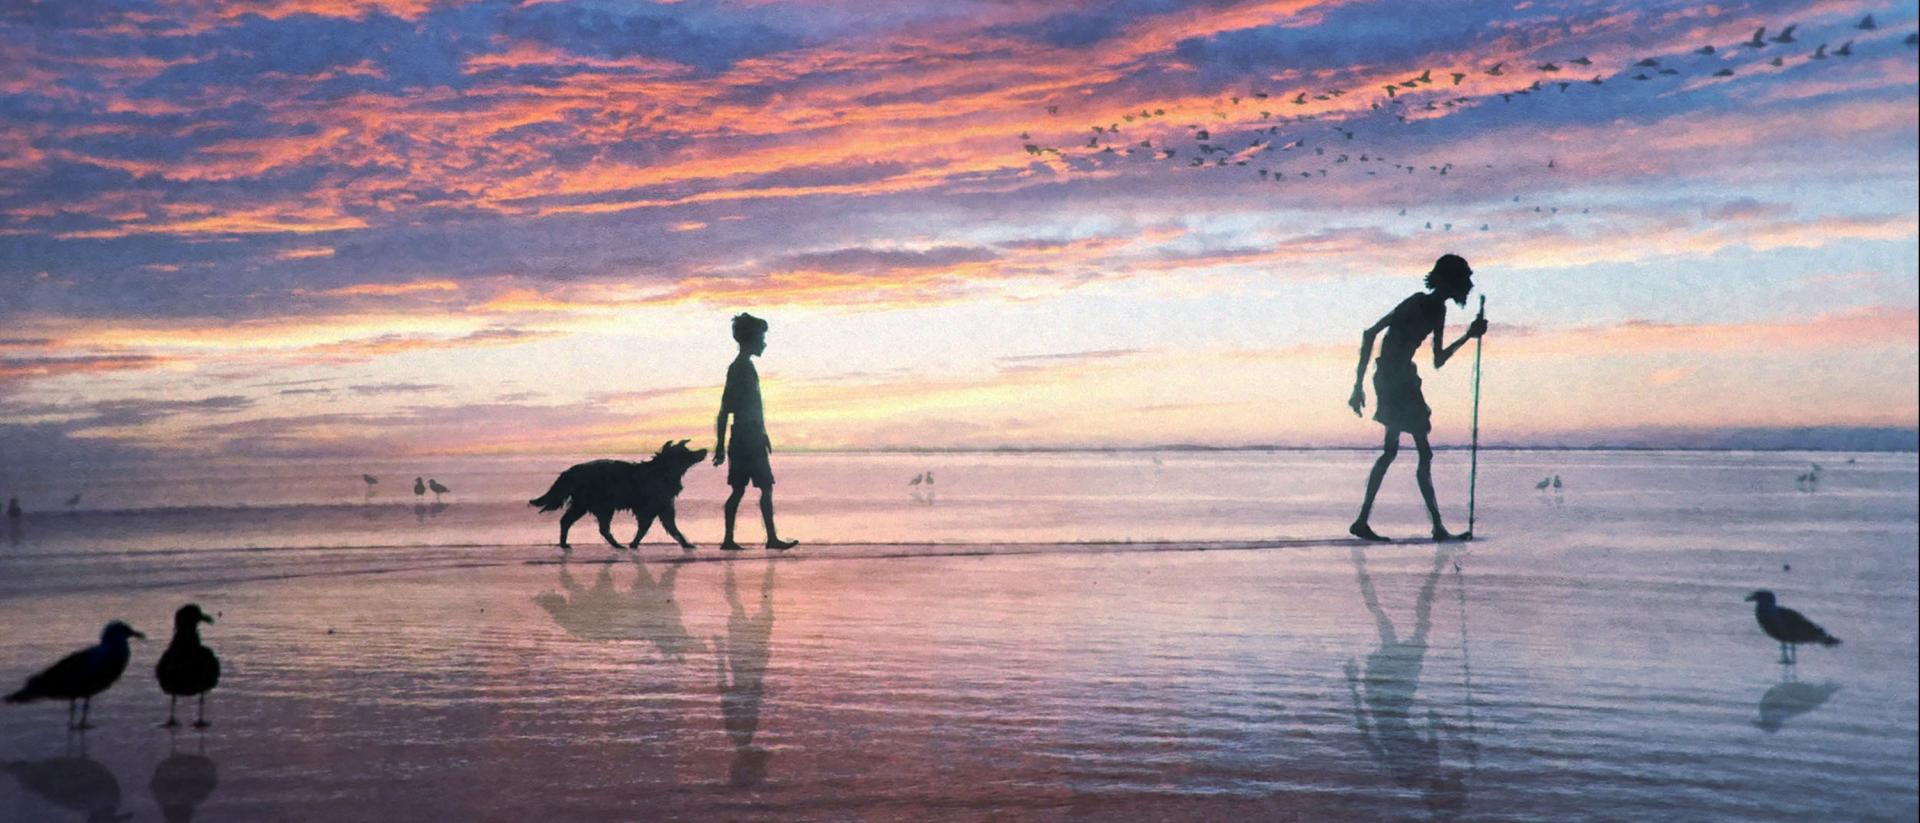 a man, a boy and his dog walk across a beach